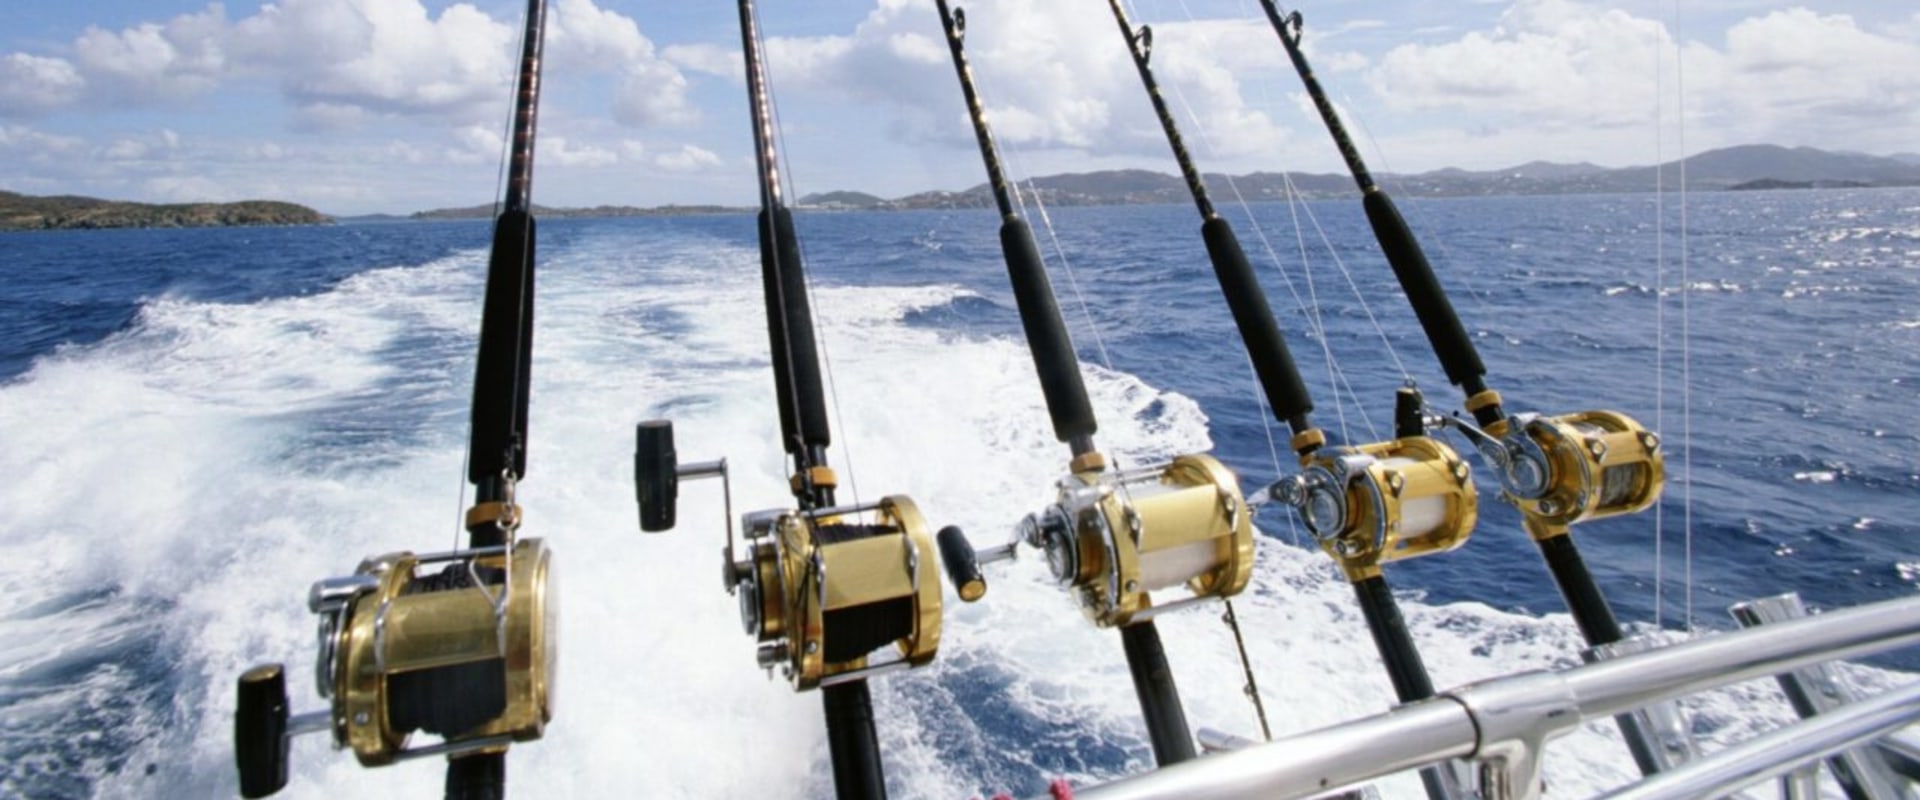 Who fishing charters?